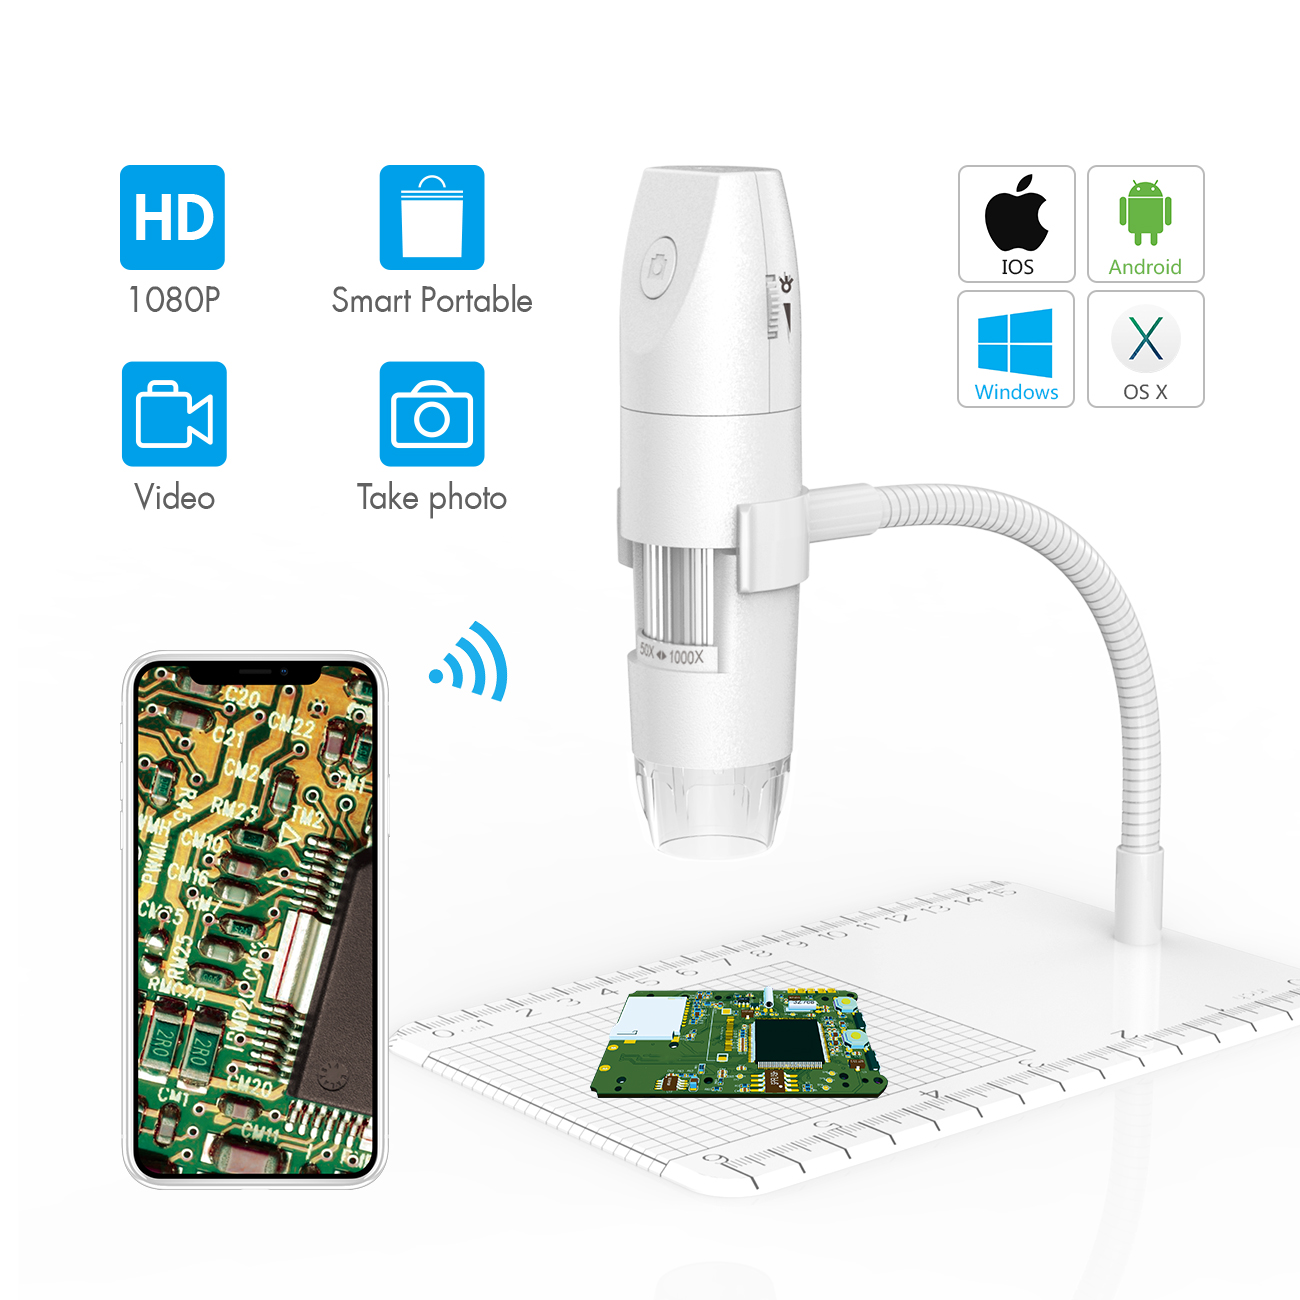 Supordu 2MP WiFi Wireless Digital Microscope HD Electron Microscope 1000X Magnification